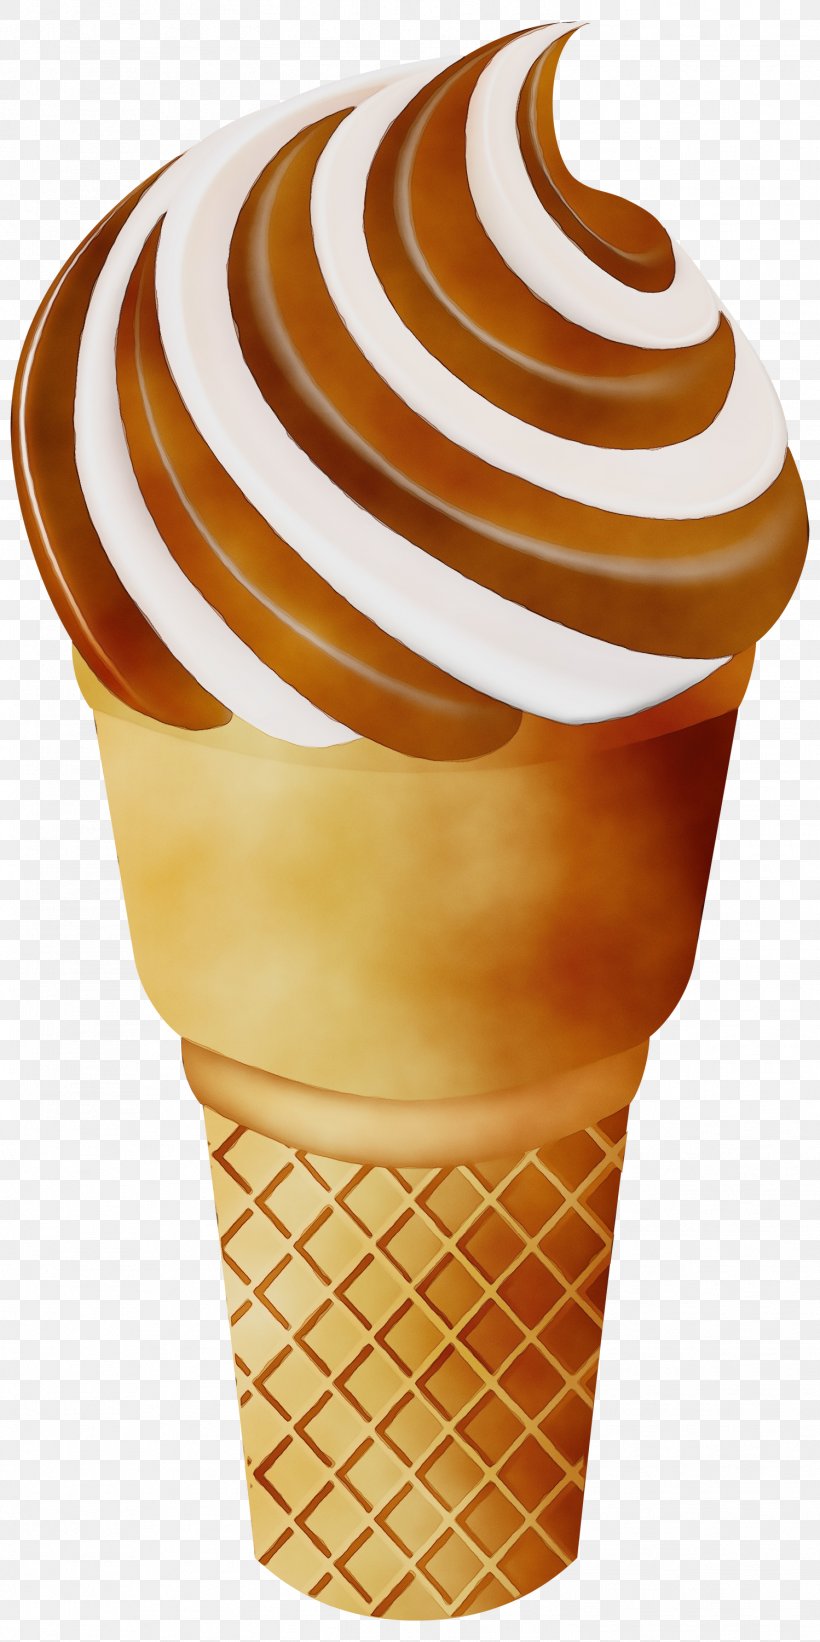 Ice Cream Cones Clip Art Image, PNG, 1498x3000px, Ice Cream, Chocolate, Chocolate Ice Cream, Cream, Cuisine Download Free